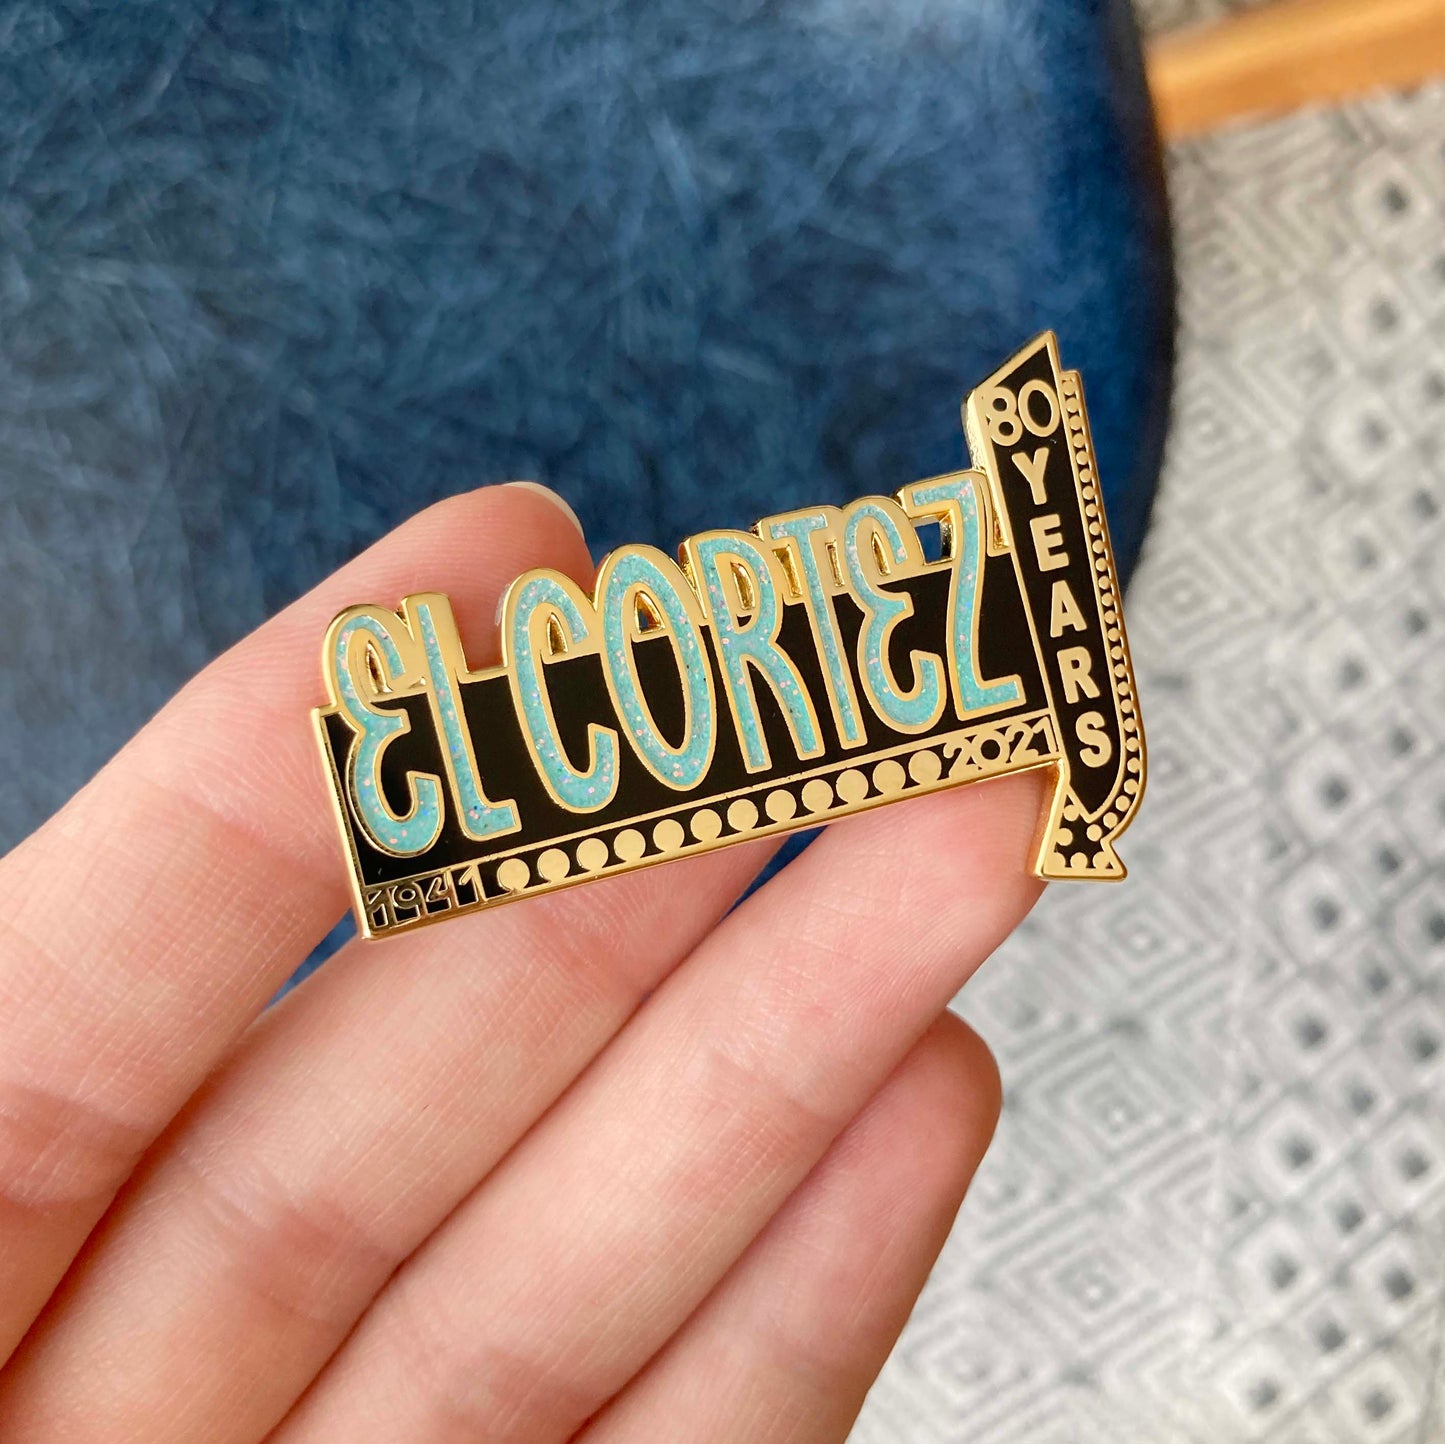 El Cortez 80th Anniversary Pin (Official)